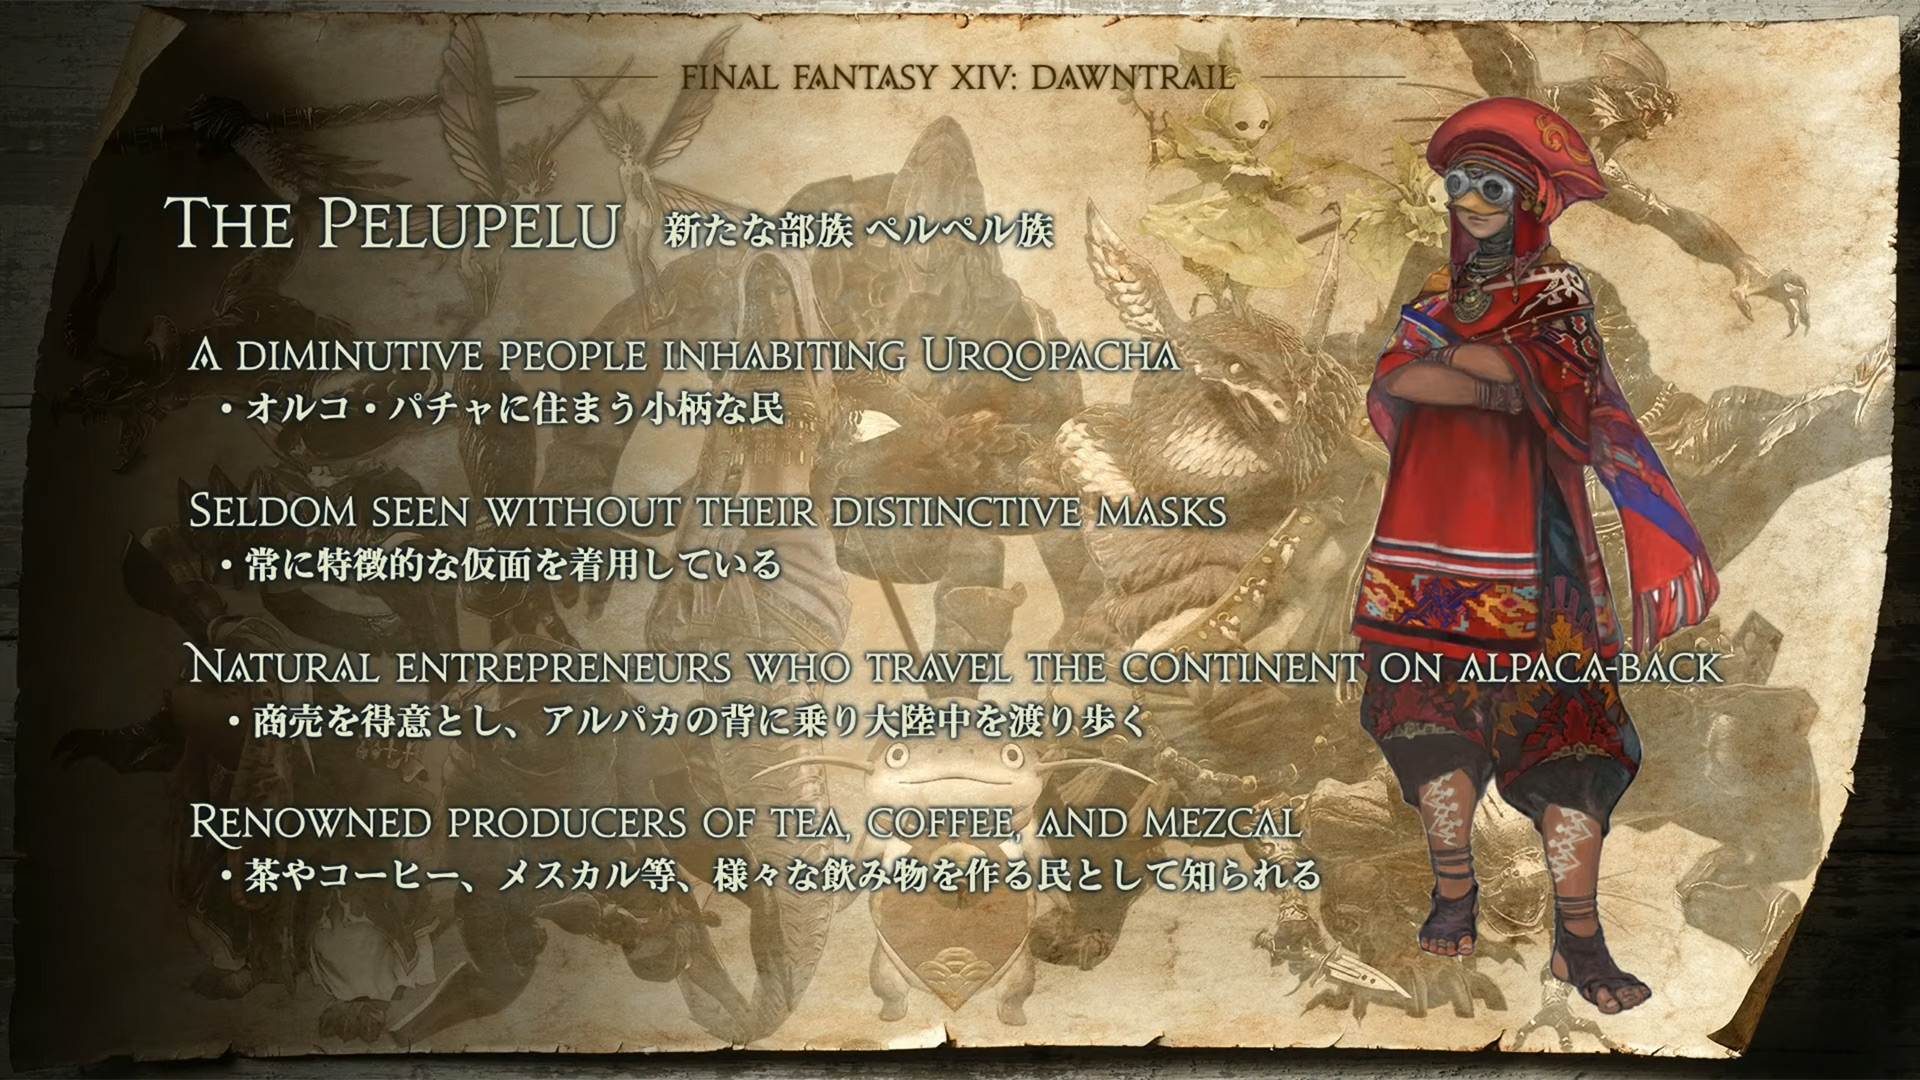 Final Fantasy XIV: Dawntrail's The Pelupelu